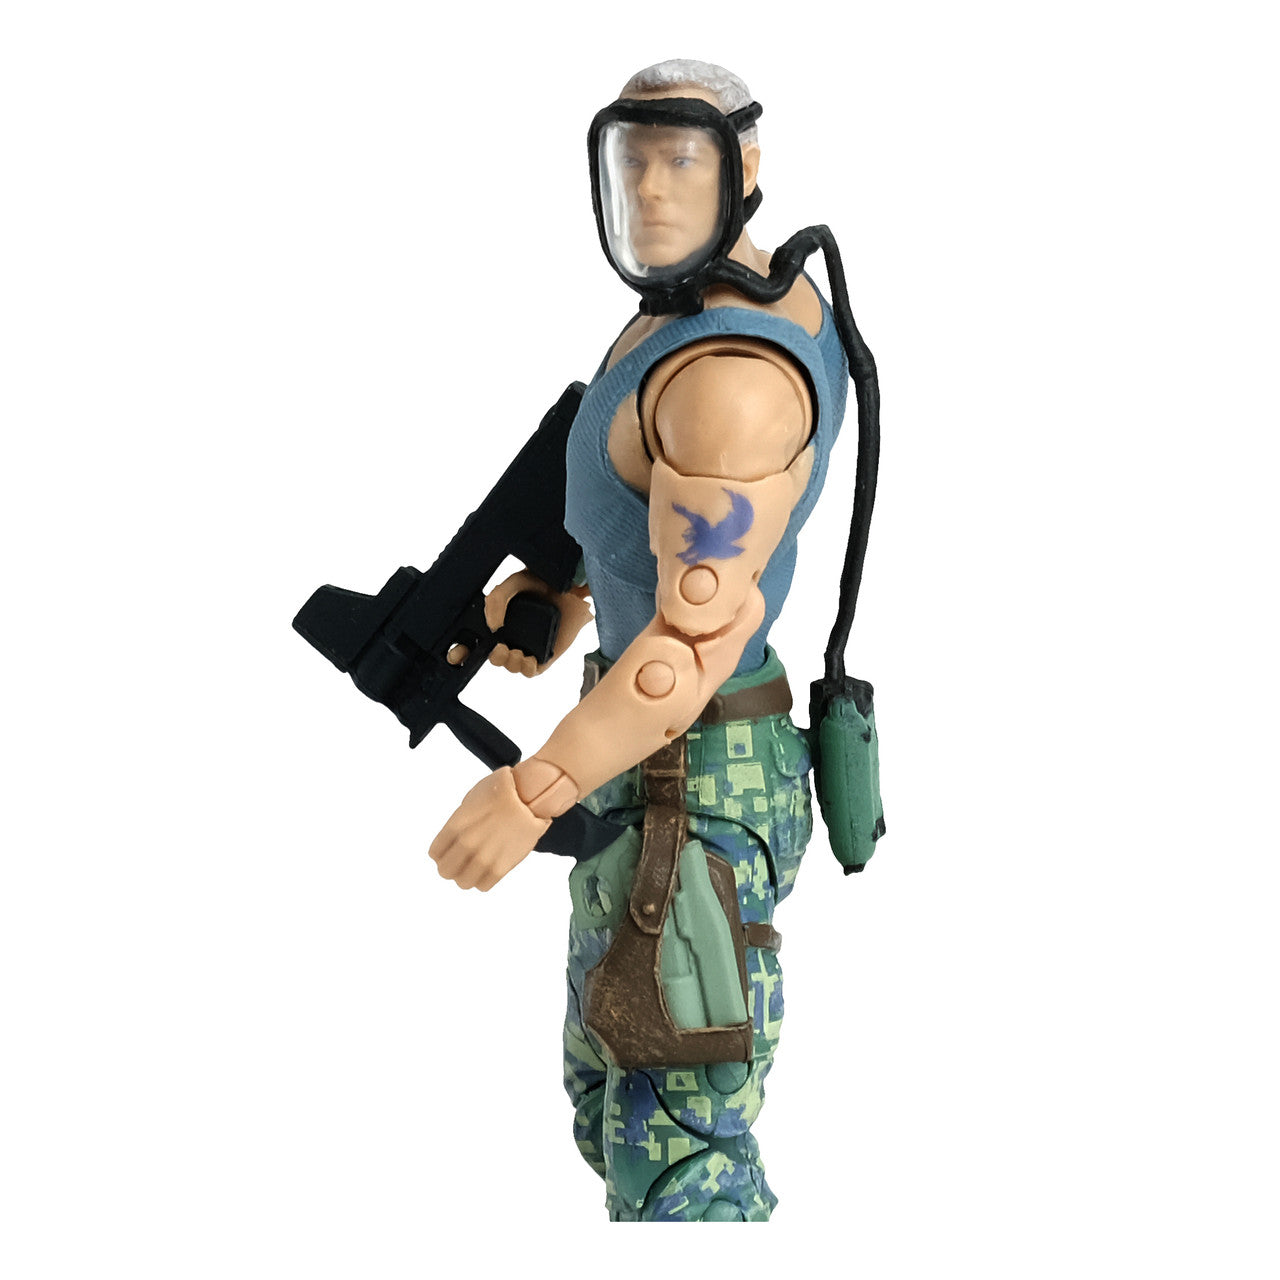 McFarlane Figura de Accion: Disney Avatar - Coronel Miles Quaritch 7 Pulgadas